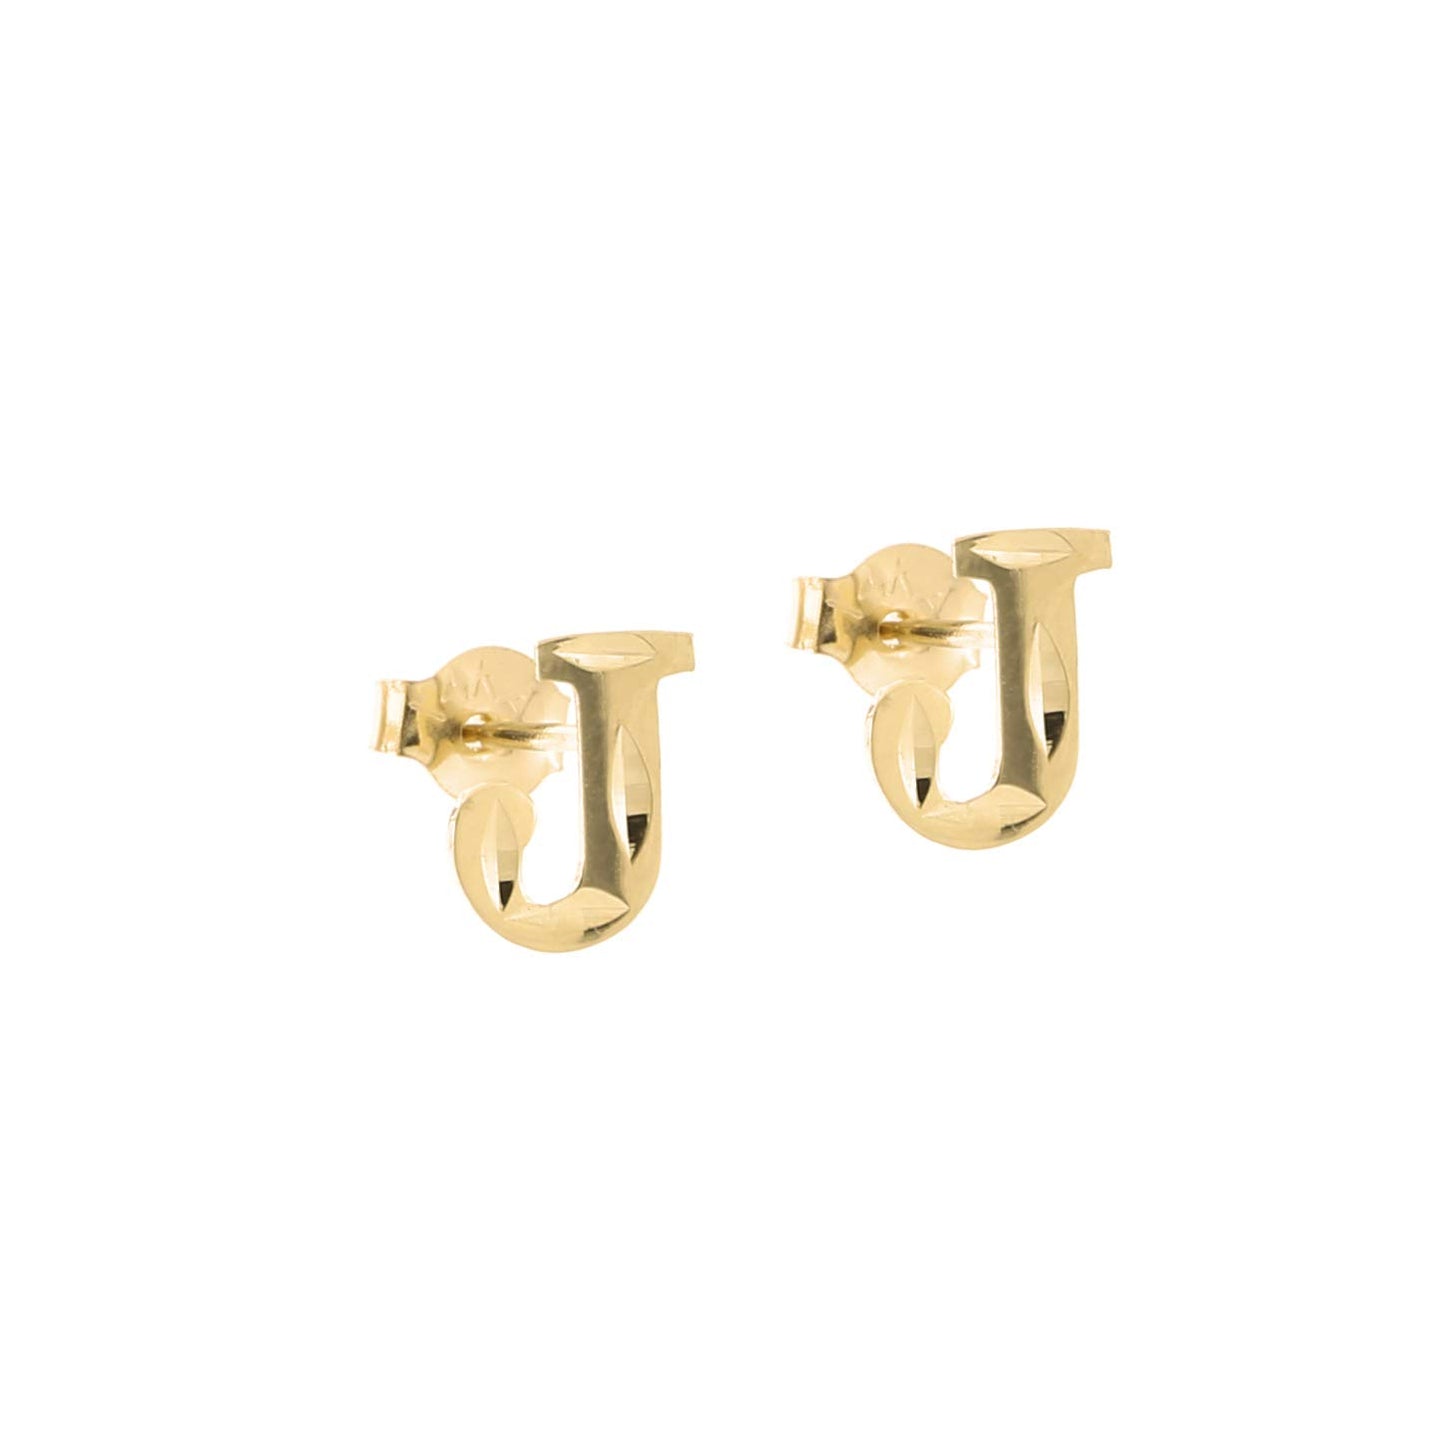 14k Real Yellow Gold Initial Letters Stud Earrings /Alphabetic Letters Earrings / Diamond Cut Letters Earrings Push Back / Aretes Oro Real